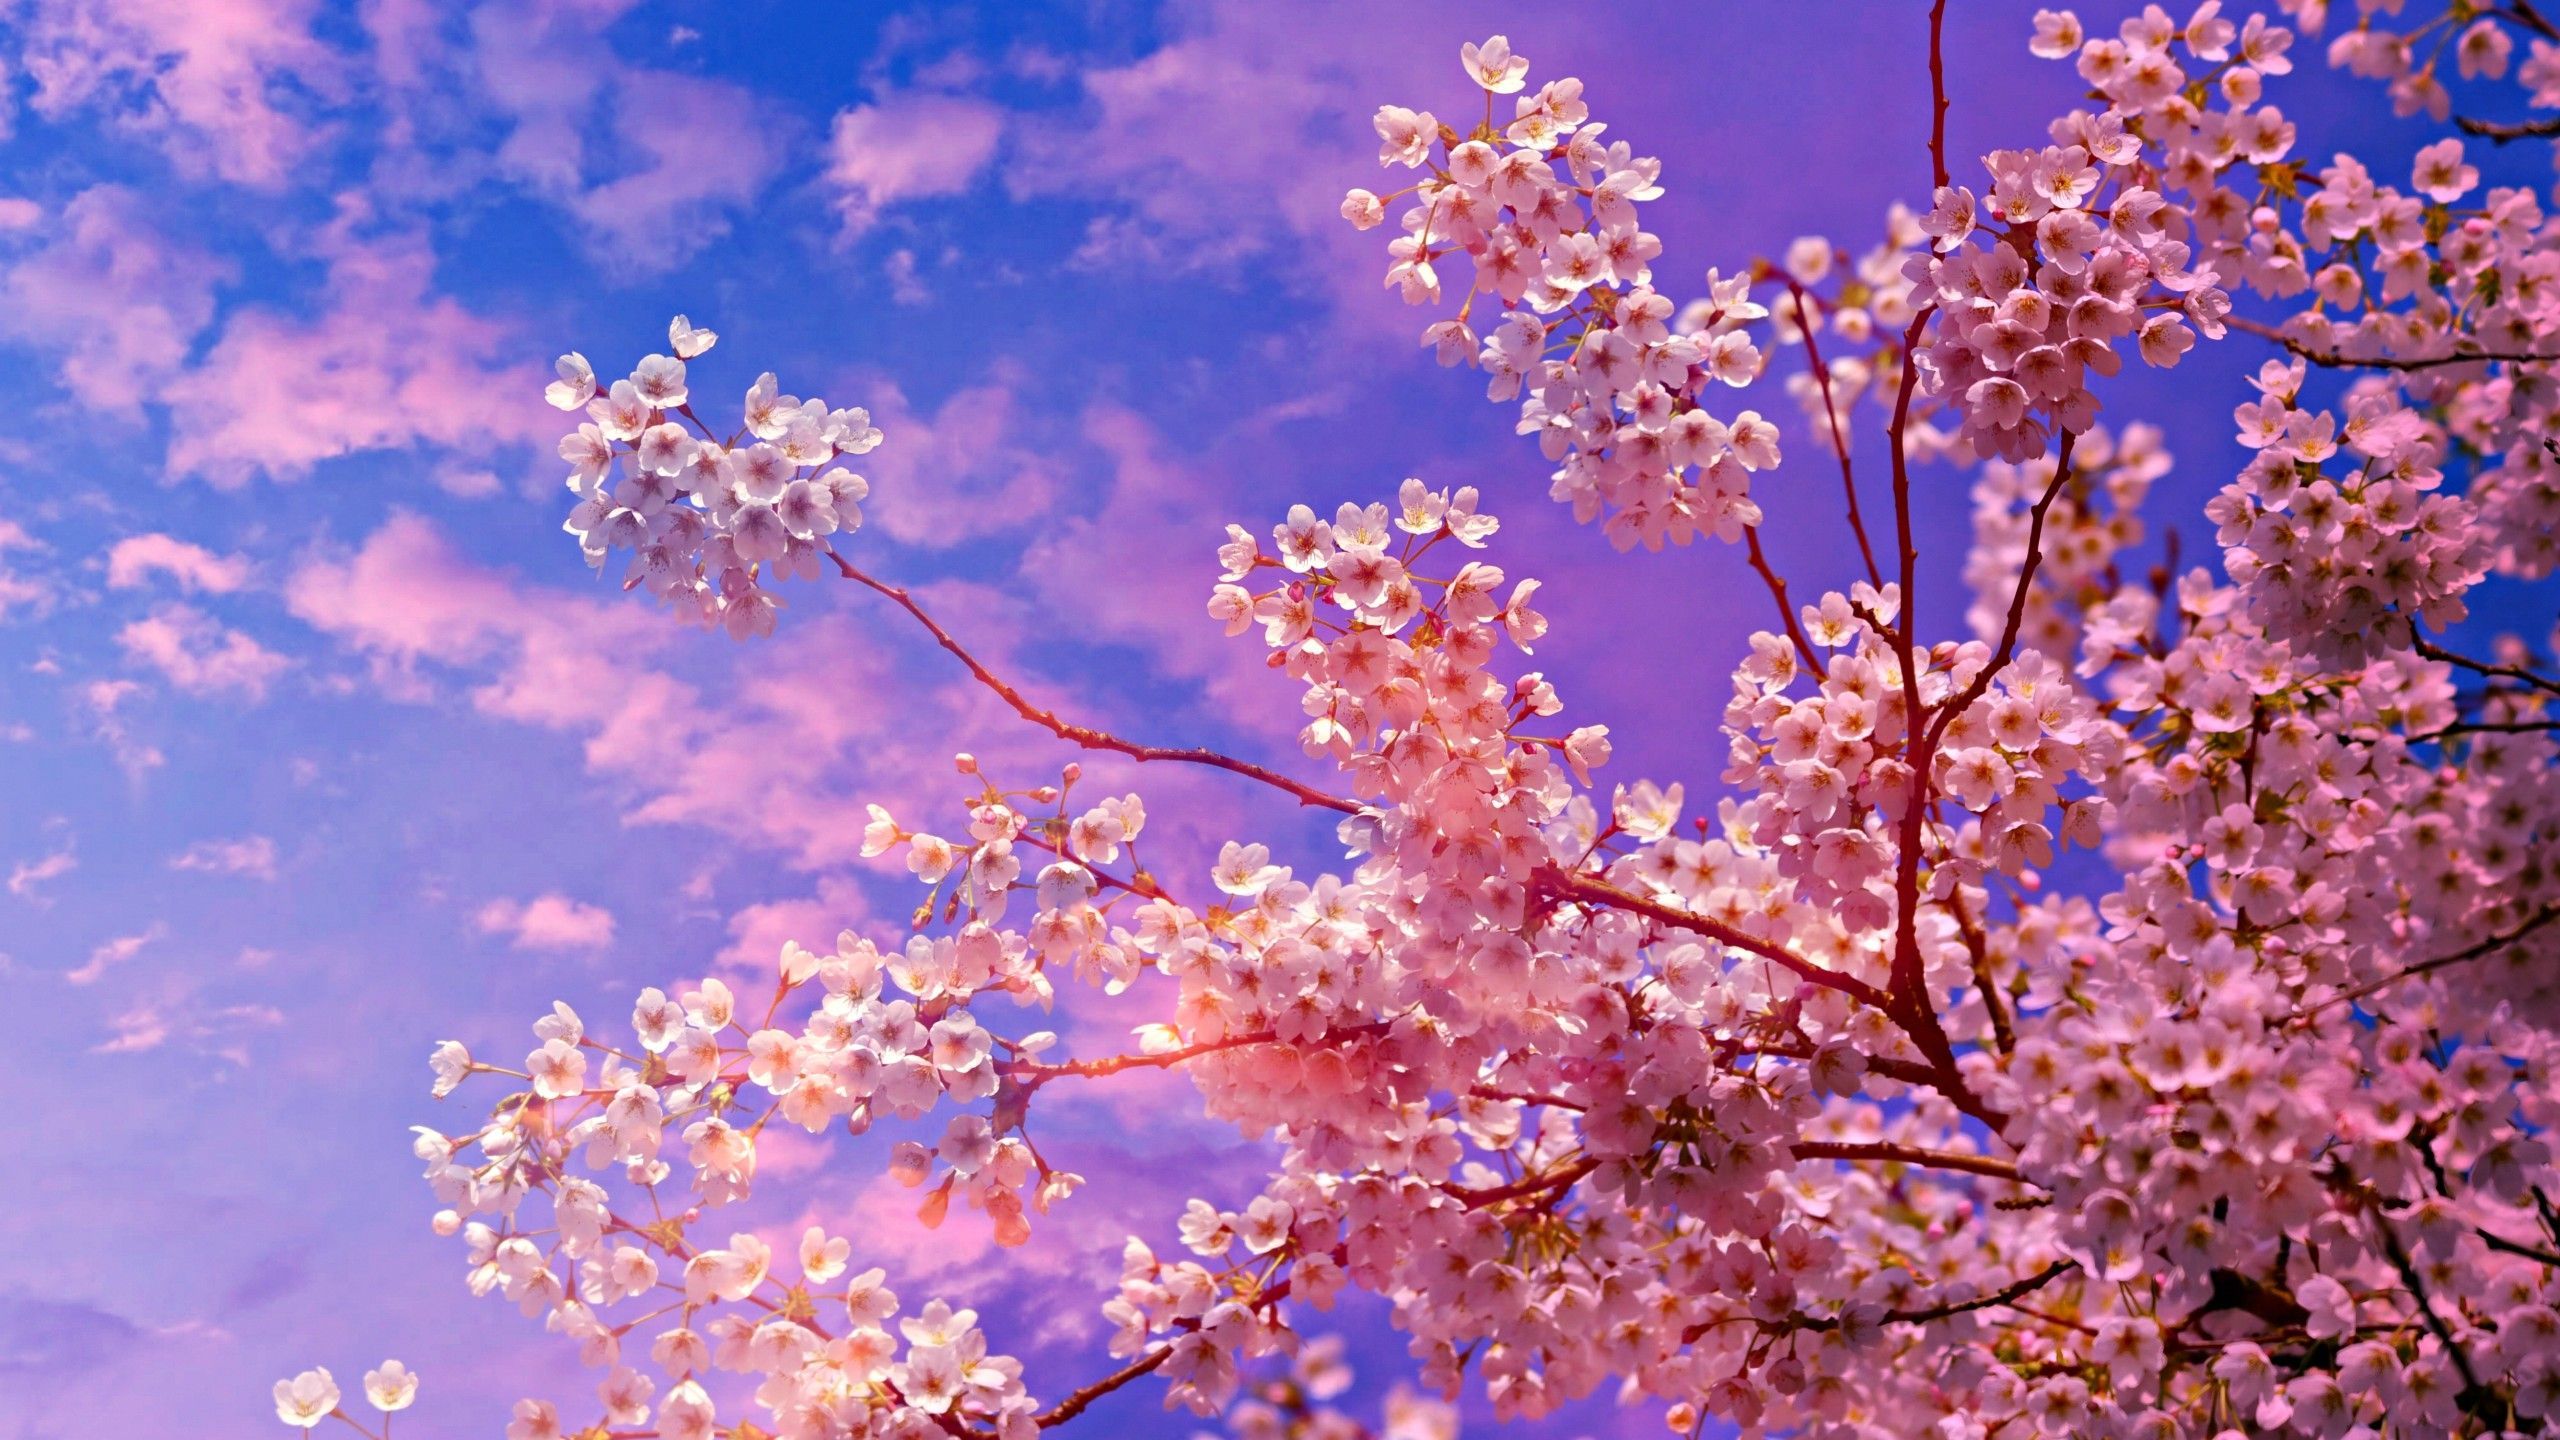 Cherry Blossom Wallpaper Free 2560x1440 Cherry Blossom Background